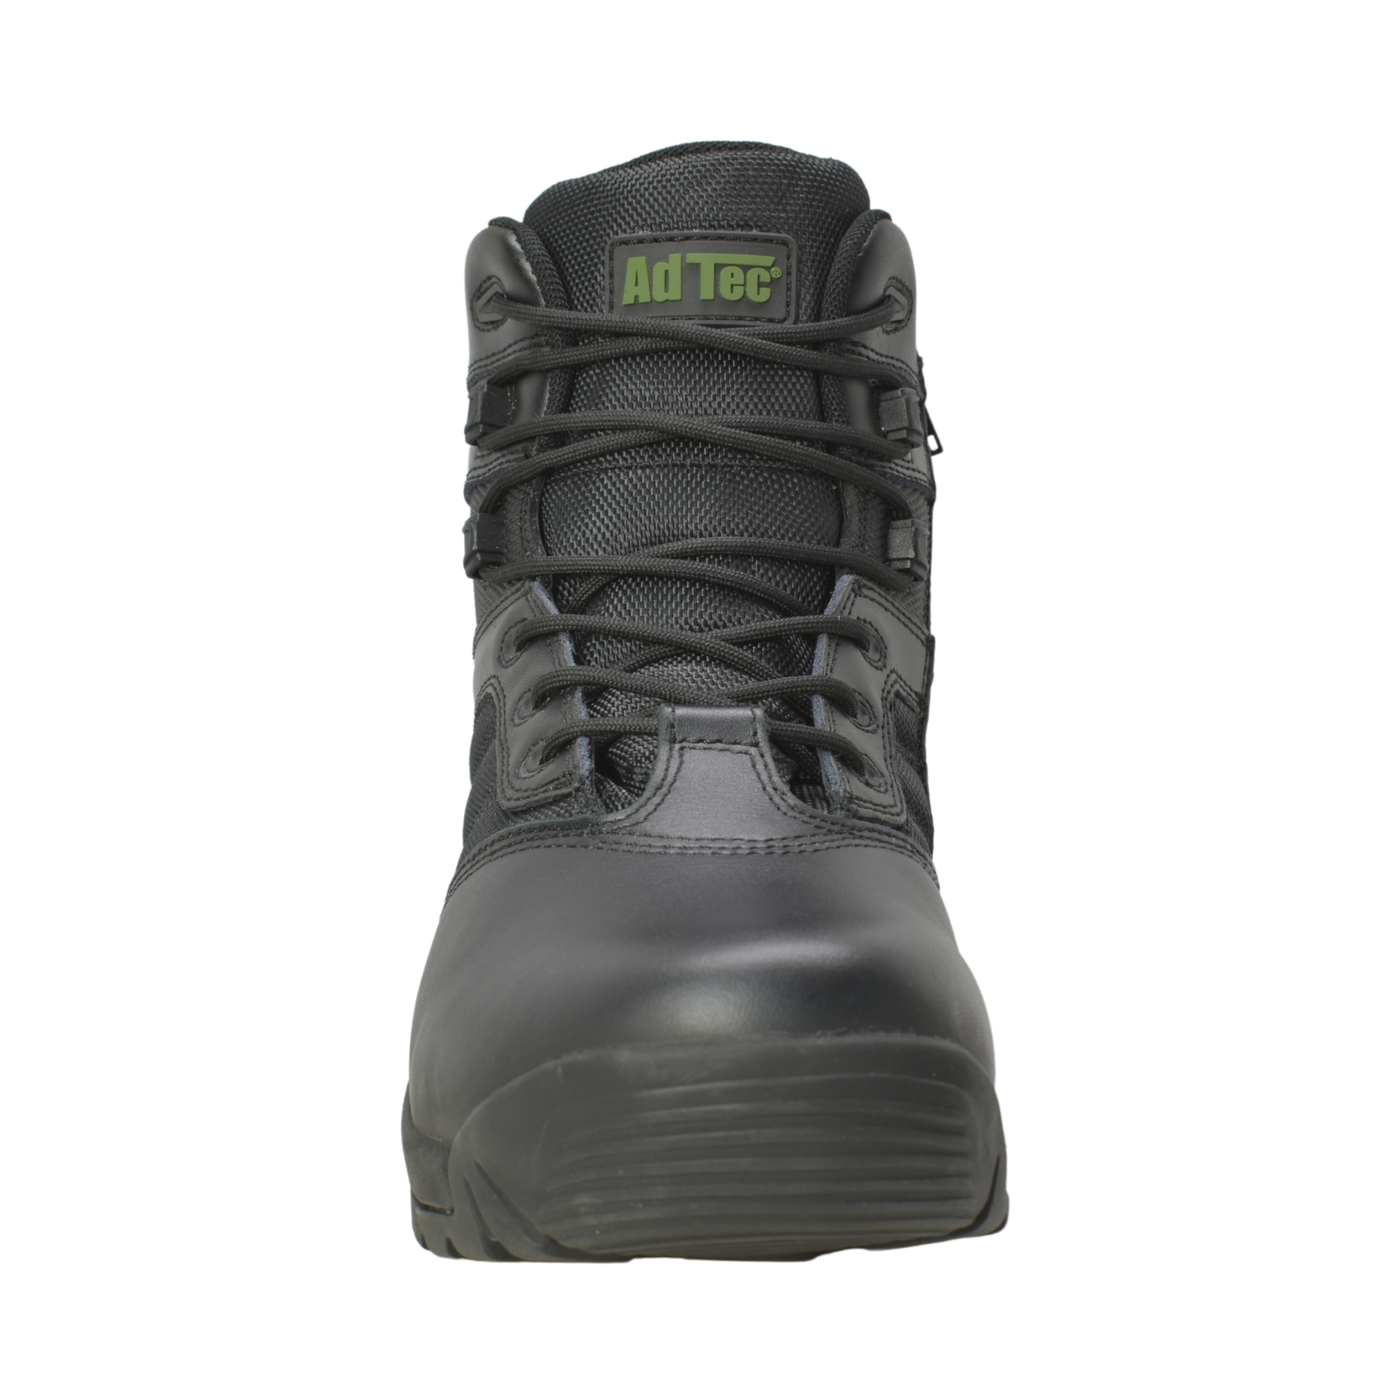 Urban PDU - Men's 6" Black Leather Tactical Boot w/ Side Zipper - KT1001